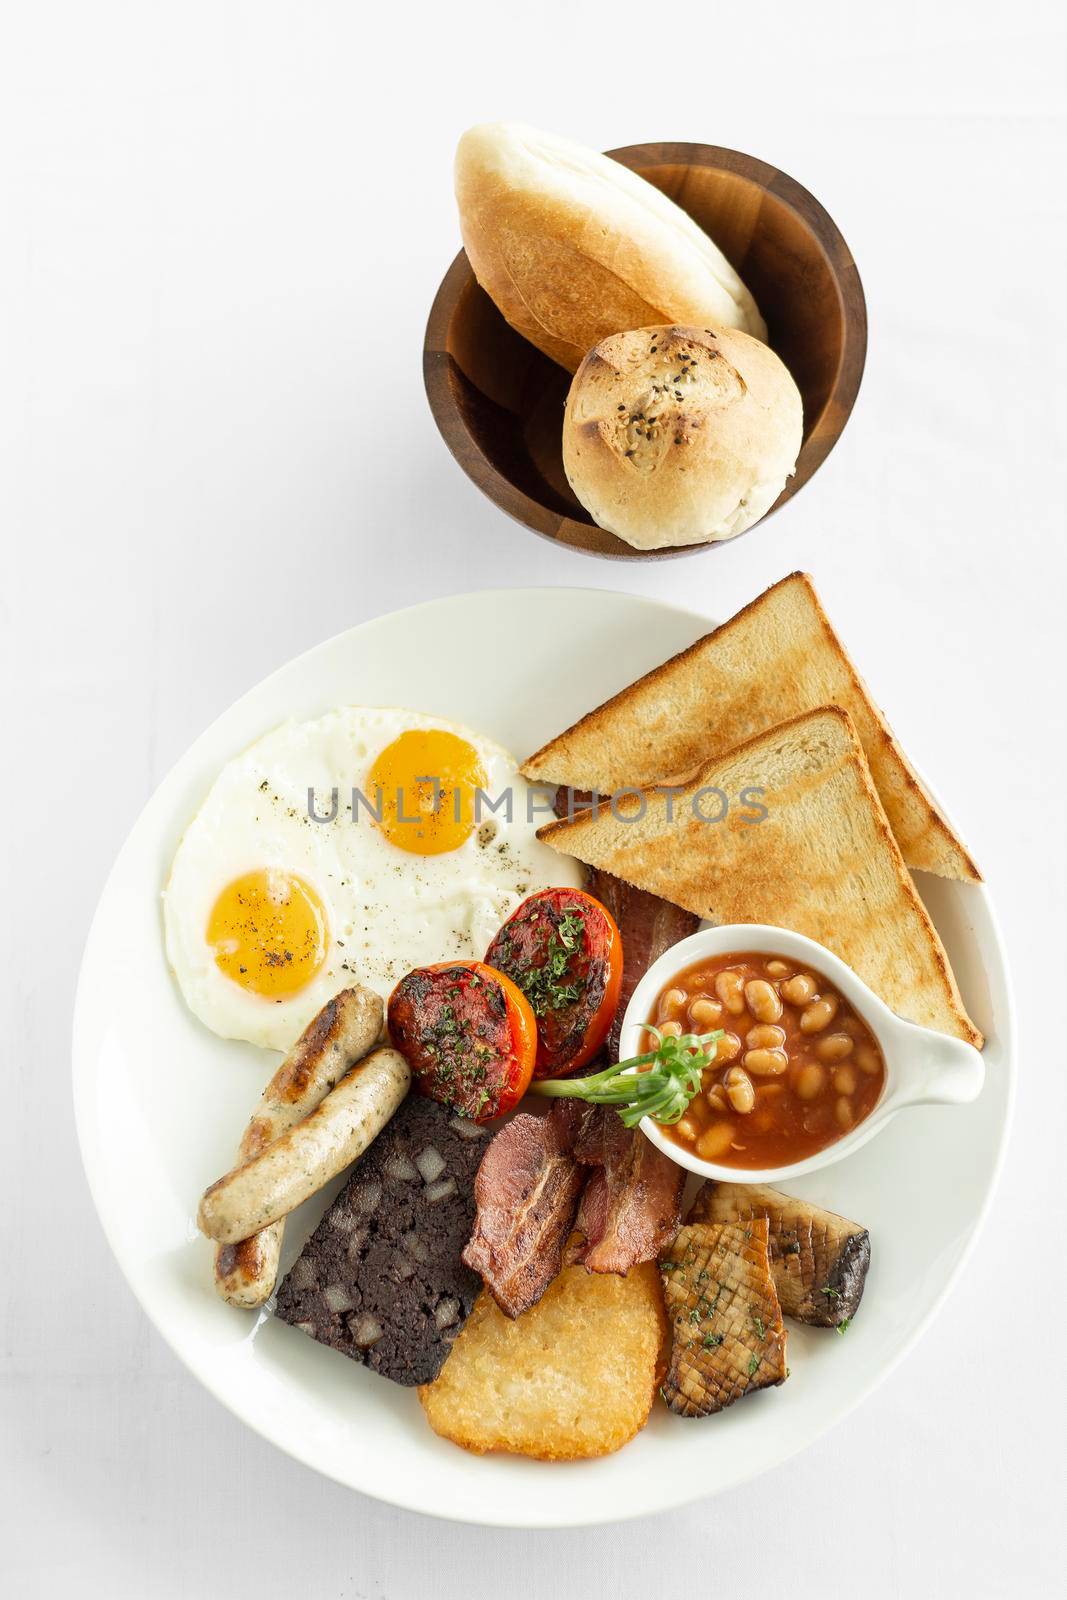 traditional full english breakfast in london UK restaurant by jackmalipan